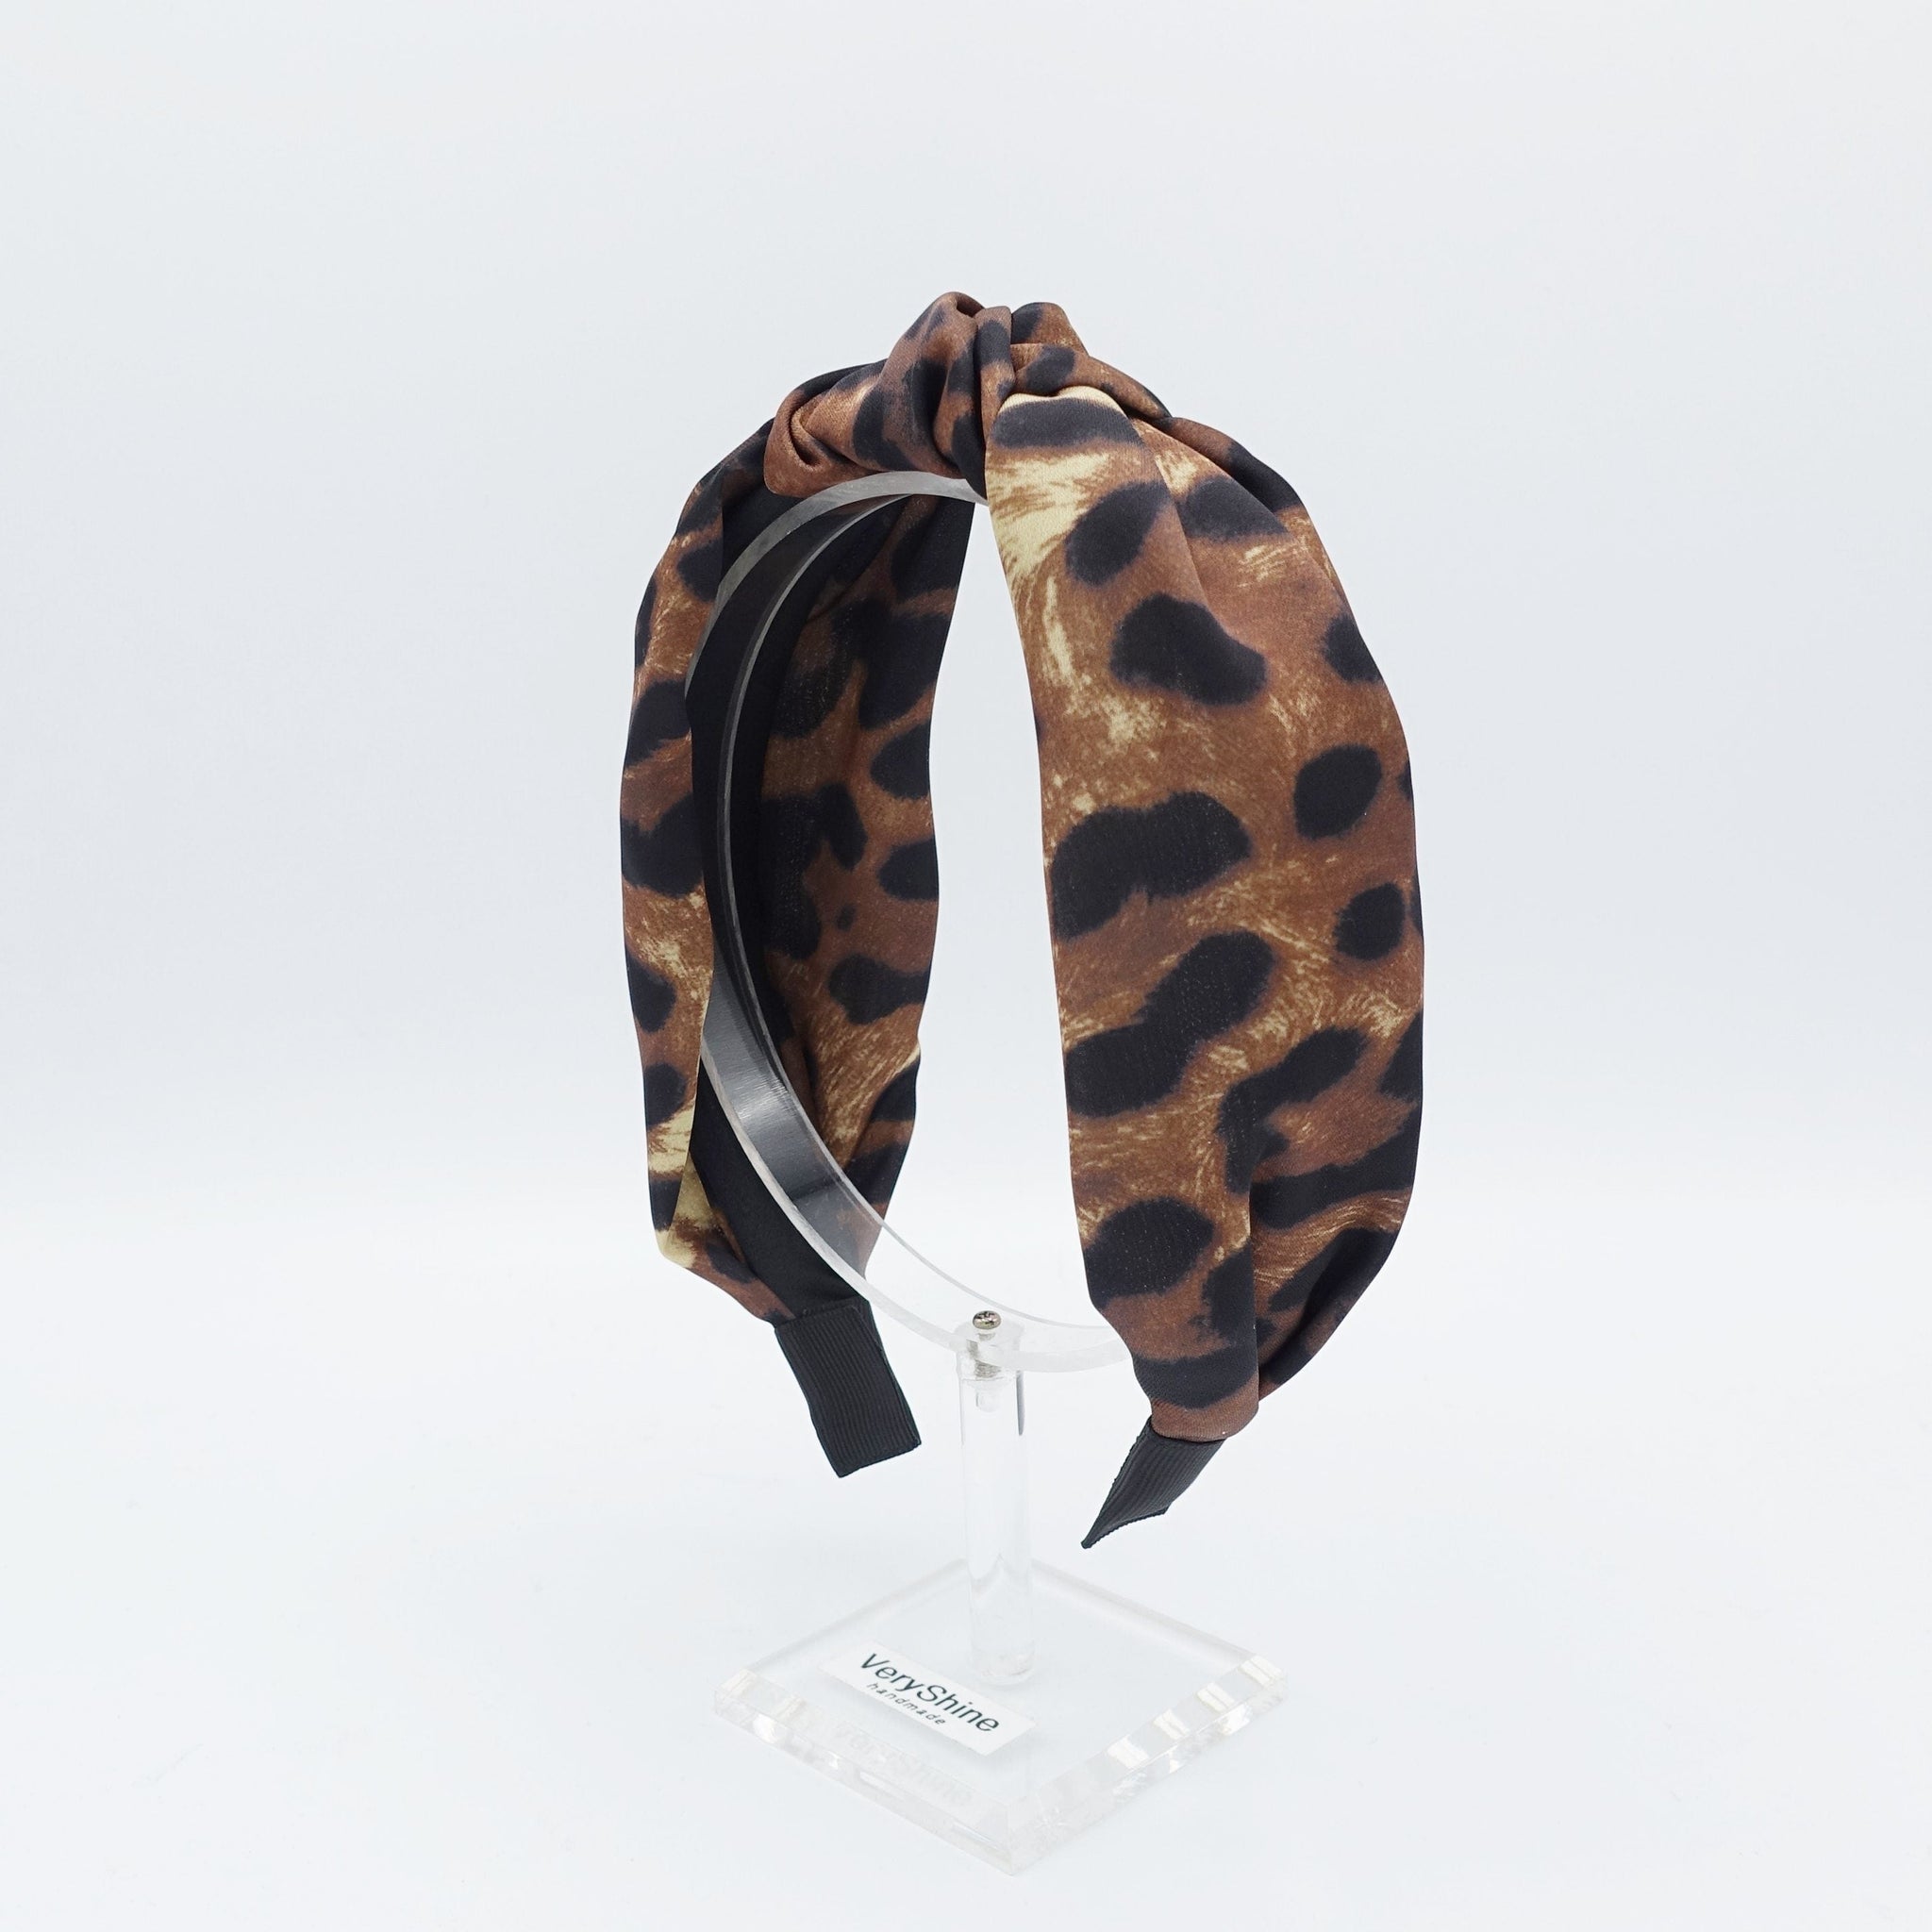 veryshine.com Barrette (Bow) satin leopard print hair bow headband collection women hair accessories